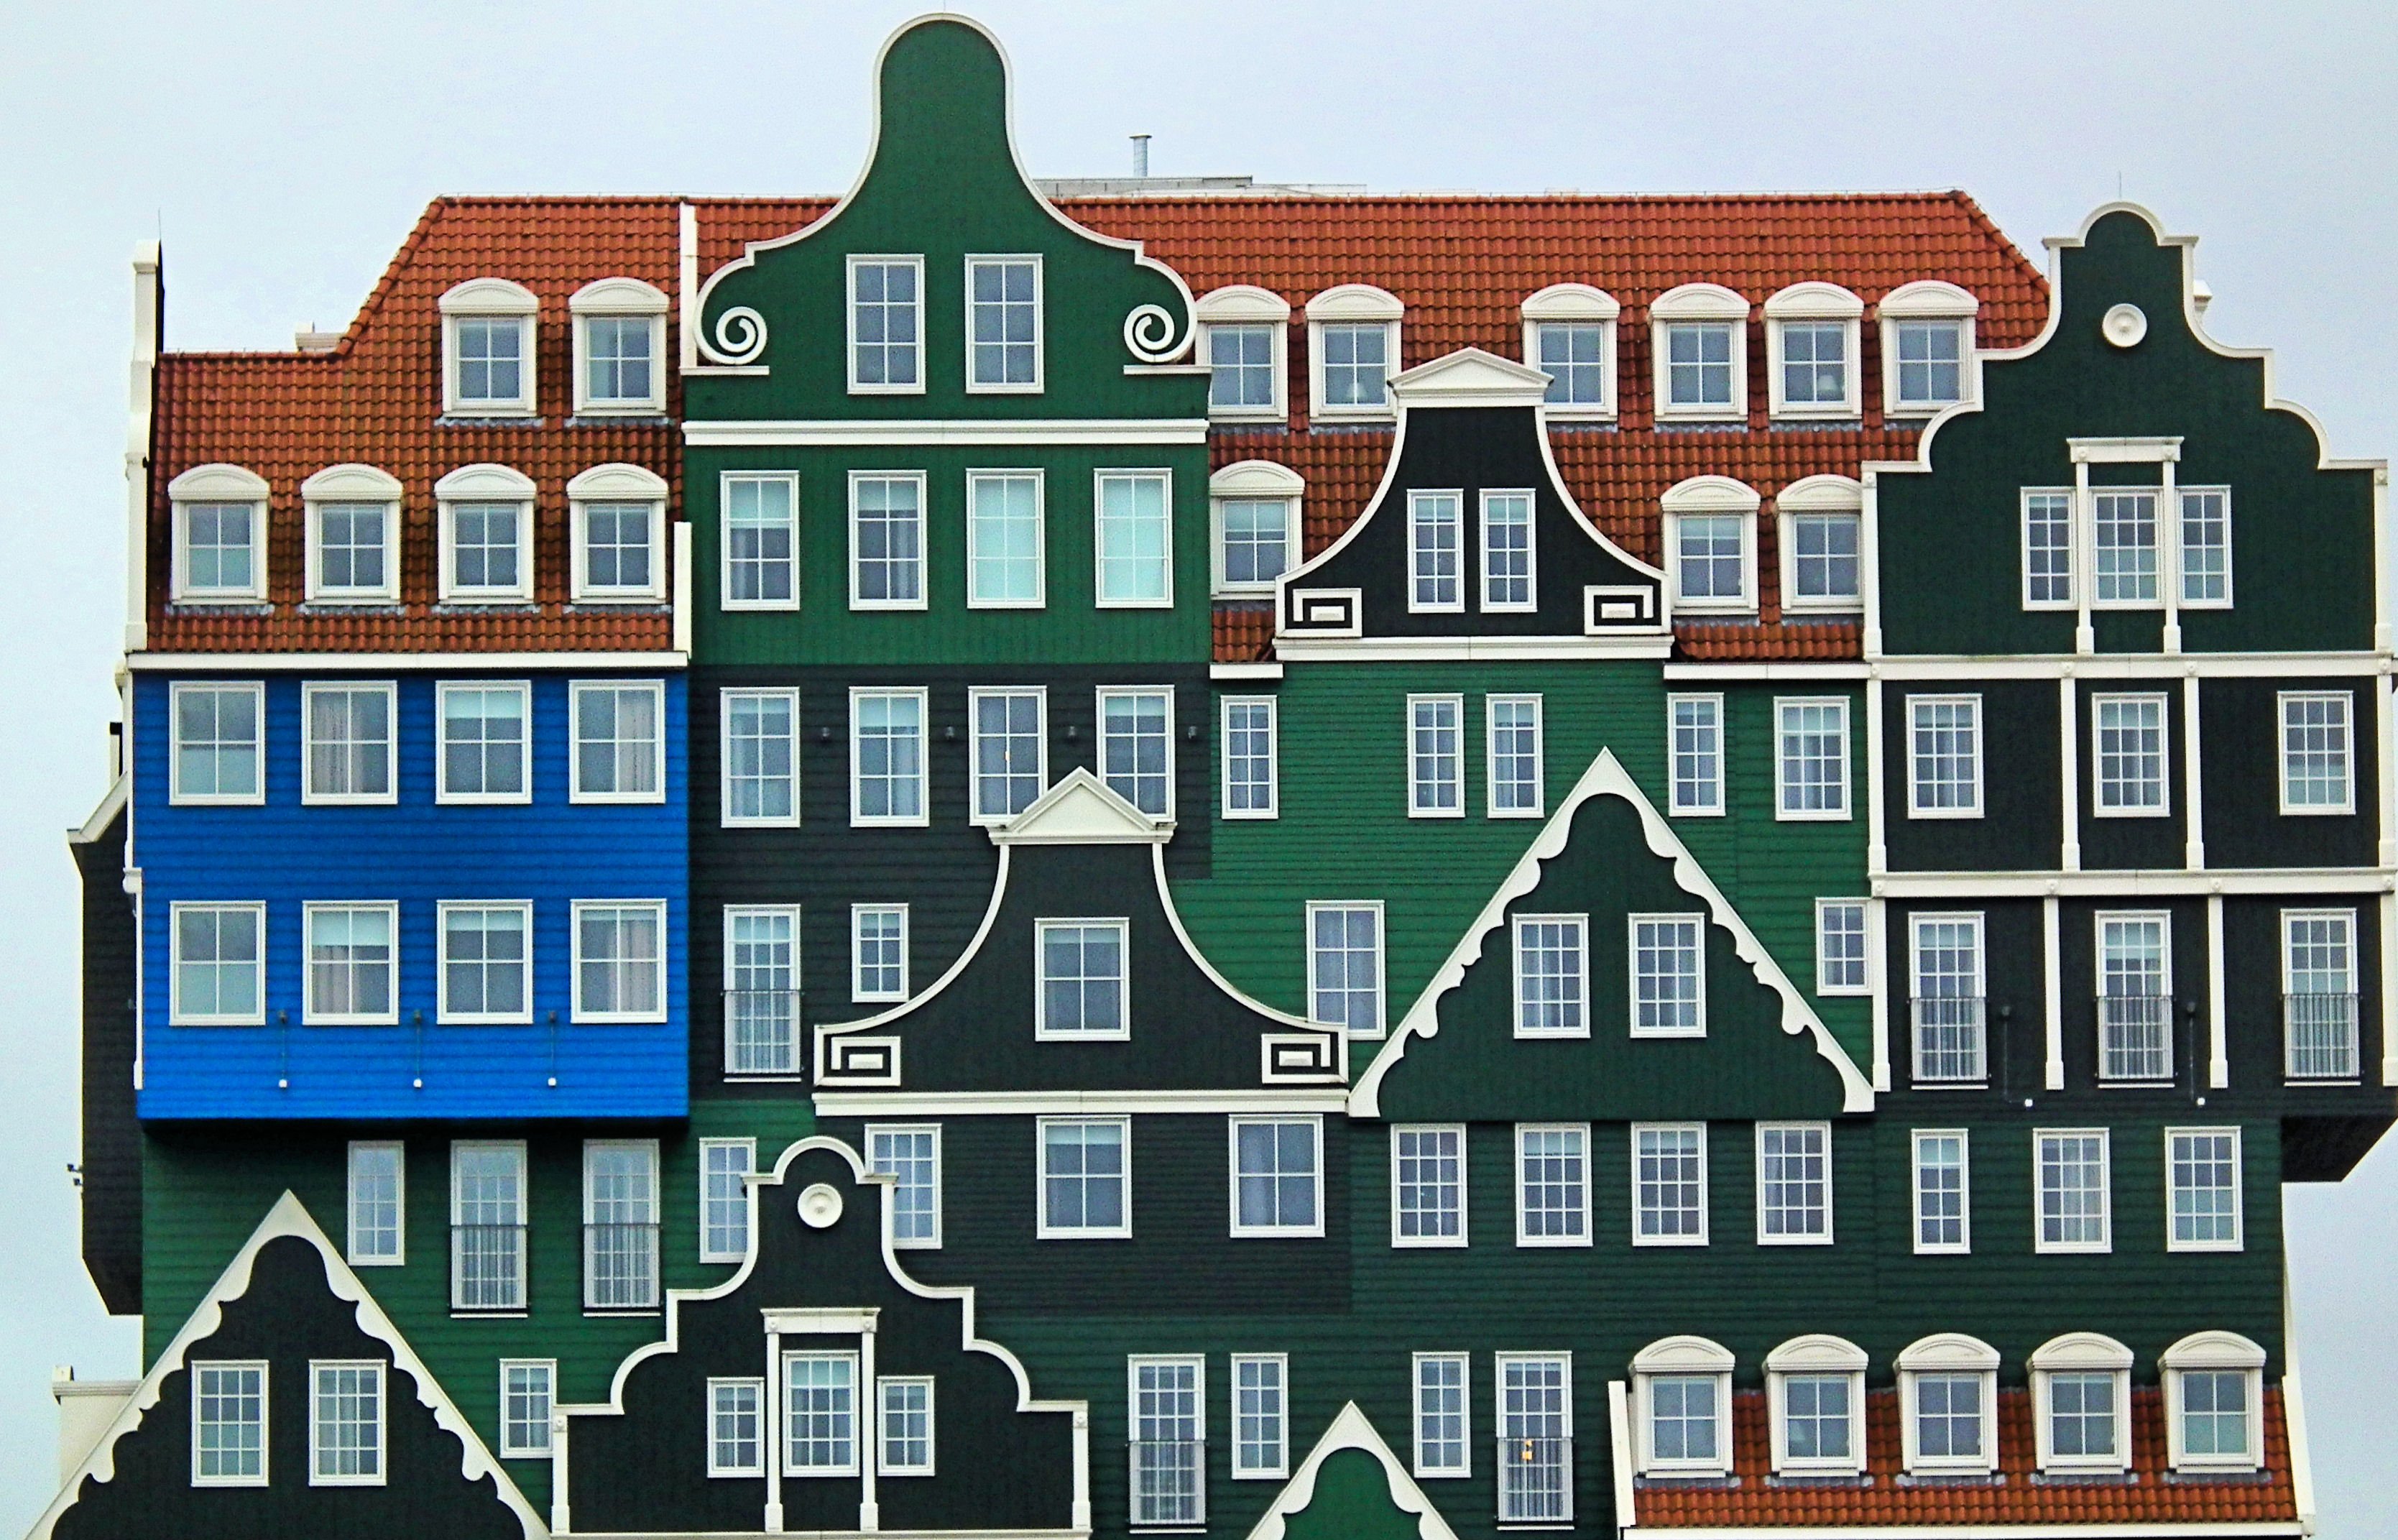 Голландская дом 3. Inntel Zaandam, Нидерланды Архитектор. Заандам отель. Inntel Hotels Amsterdam-Zaandam,Заандам, Голландия. Голландские домики.